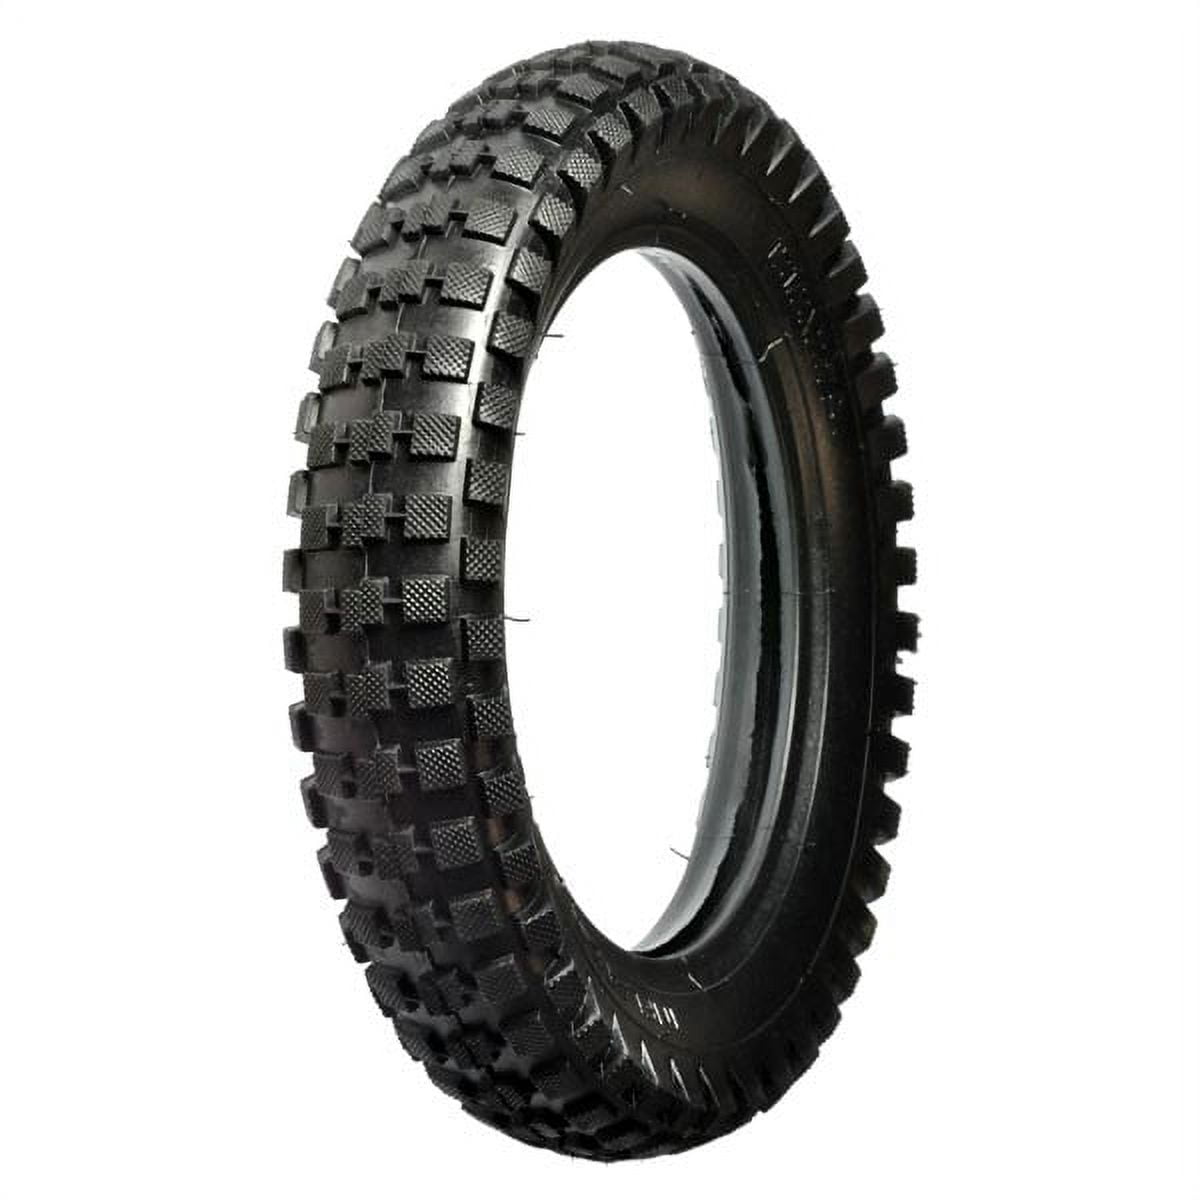 12-1/2 x 2.75 Dirt Bike Tire and Tube Set for Razor MX350 & MX400